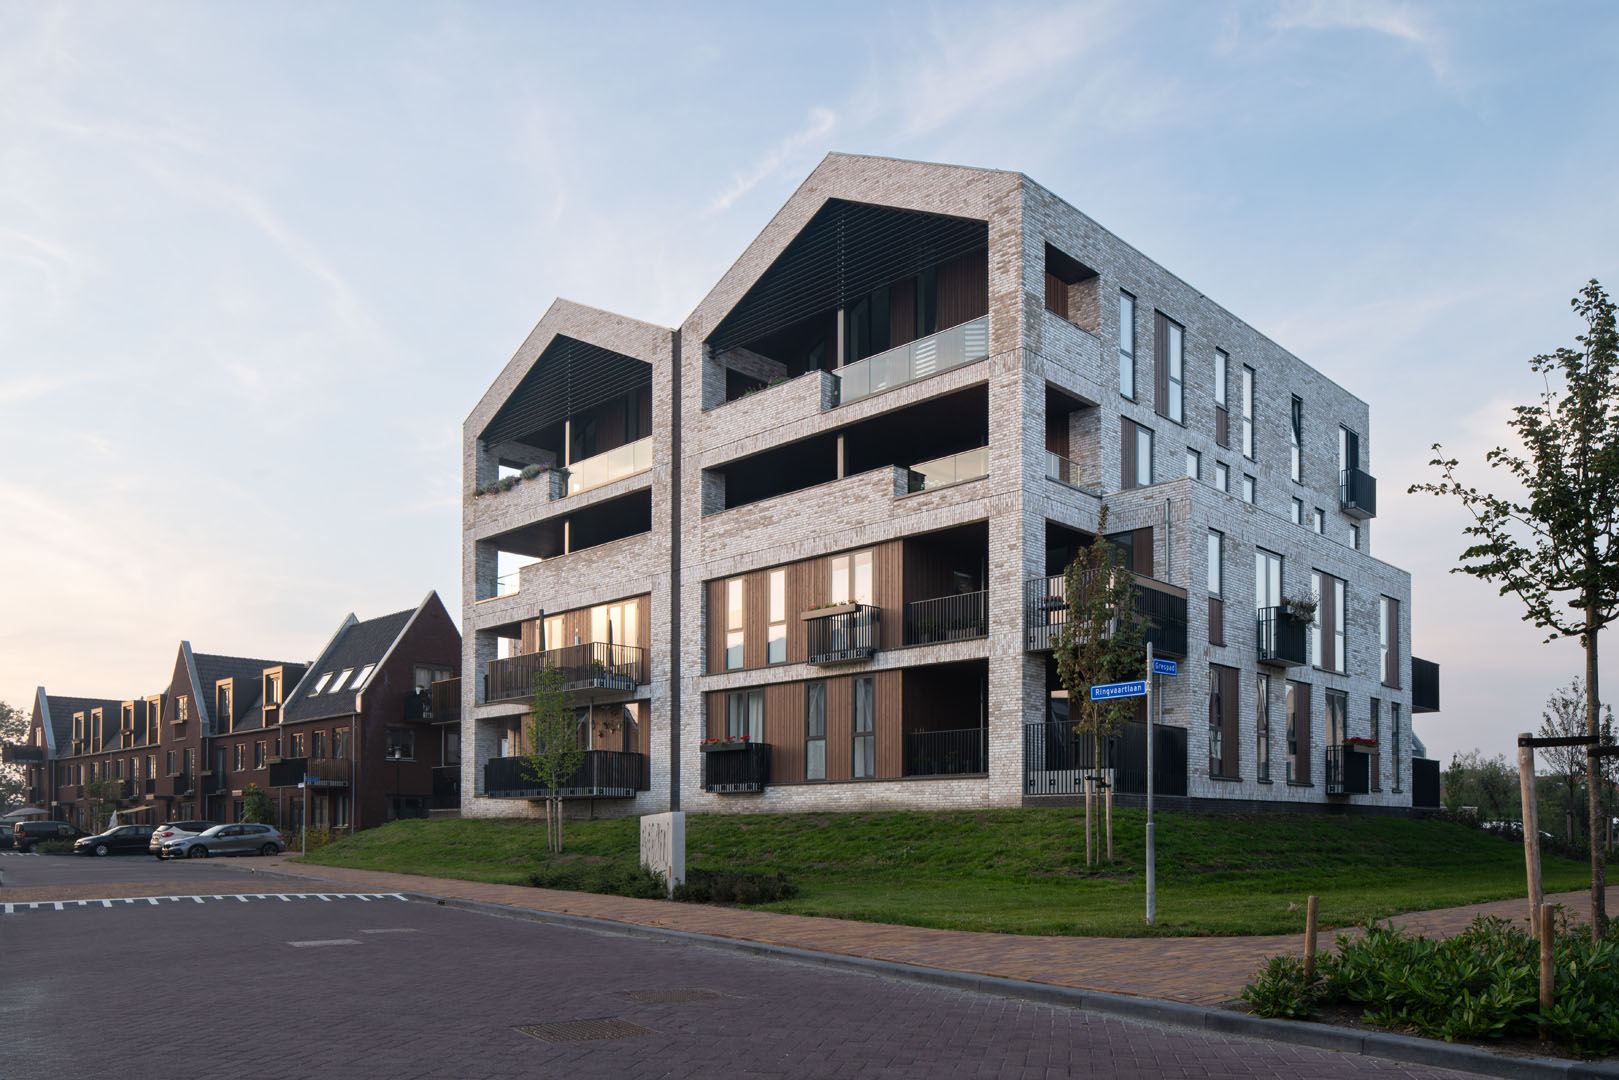 ENZO architectuur N interieur - Egbert de Boer - exterieur - woonwijk - Hillegom - haven - appartementencomplex - havenzicht